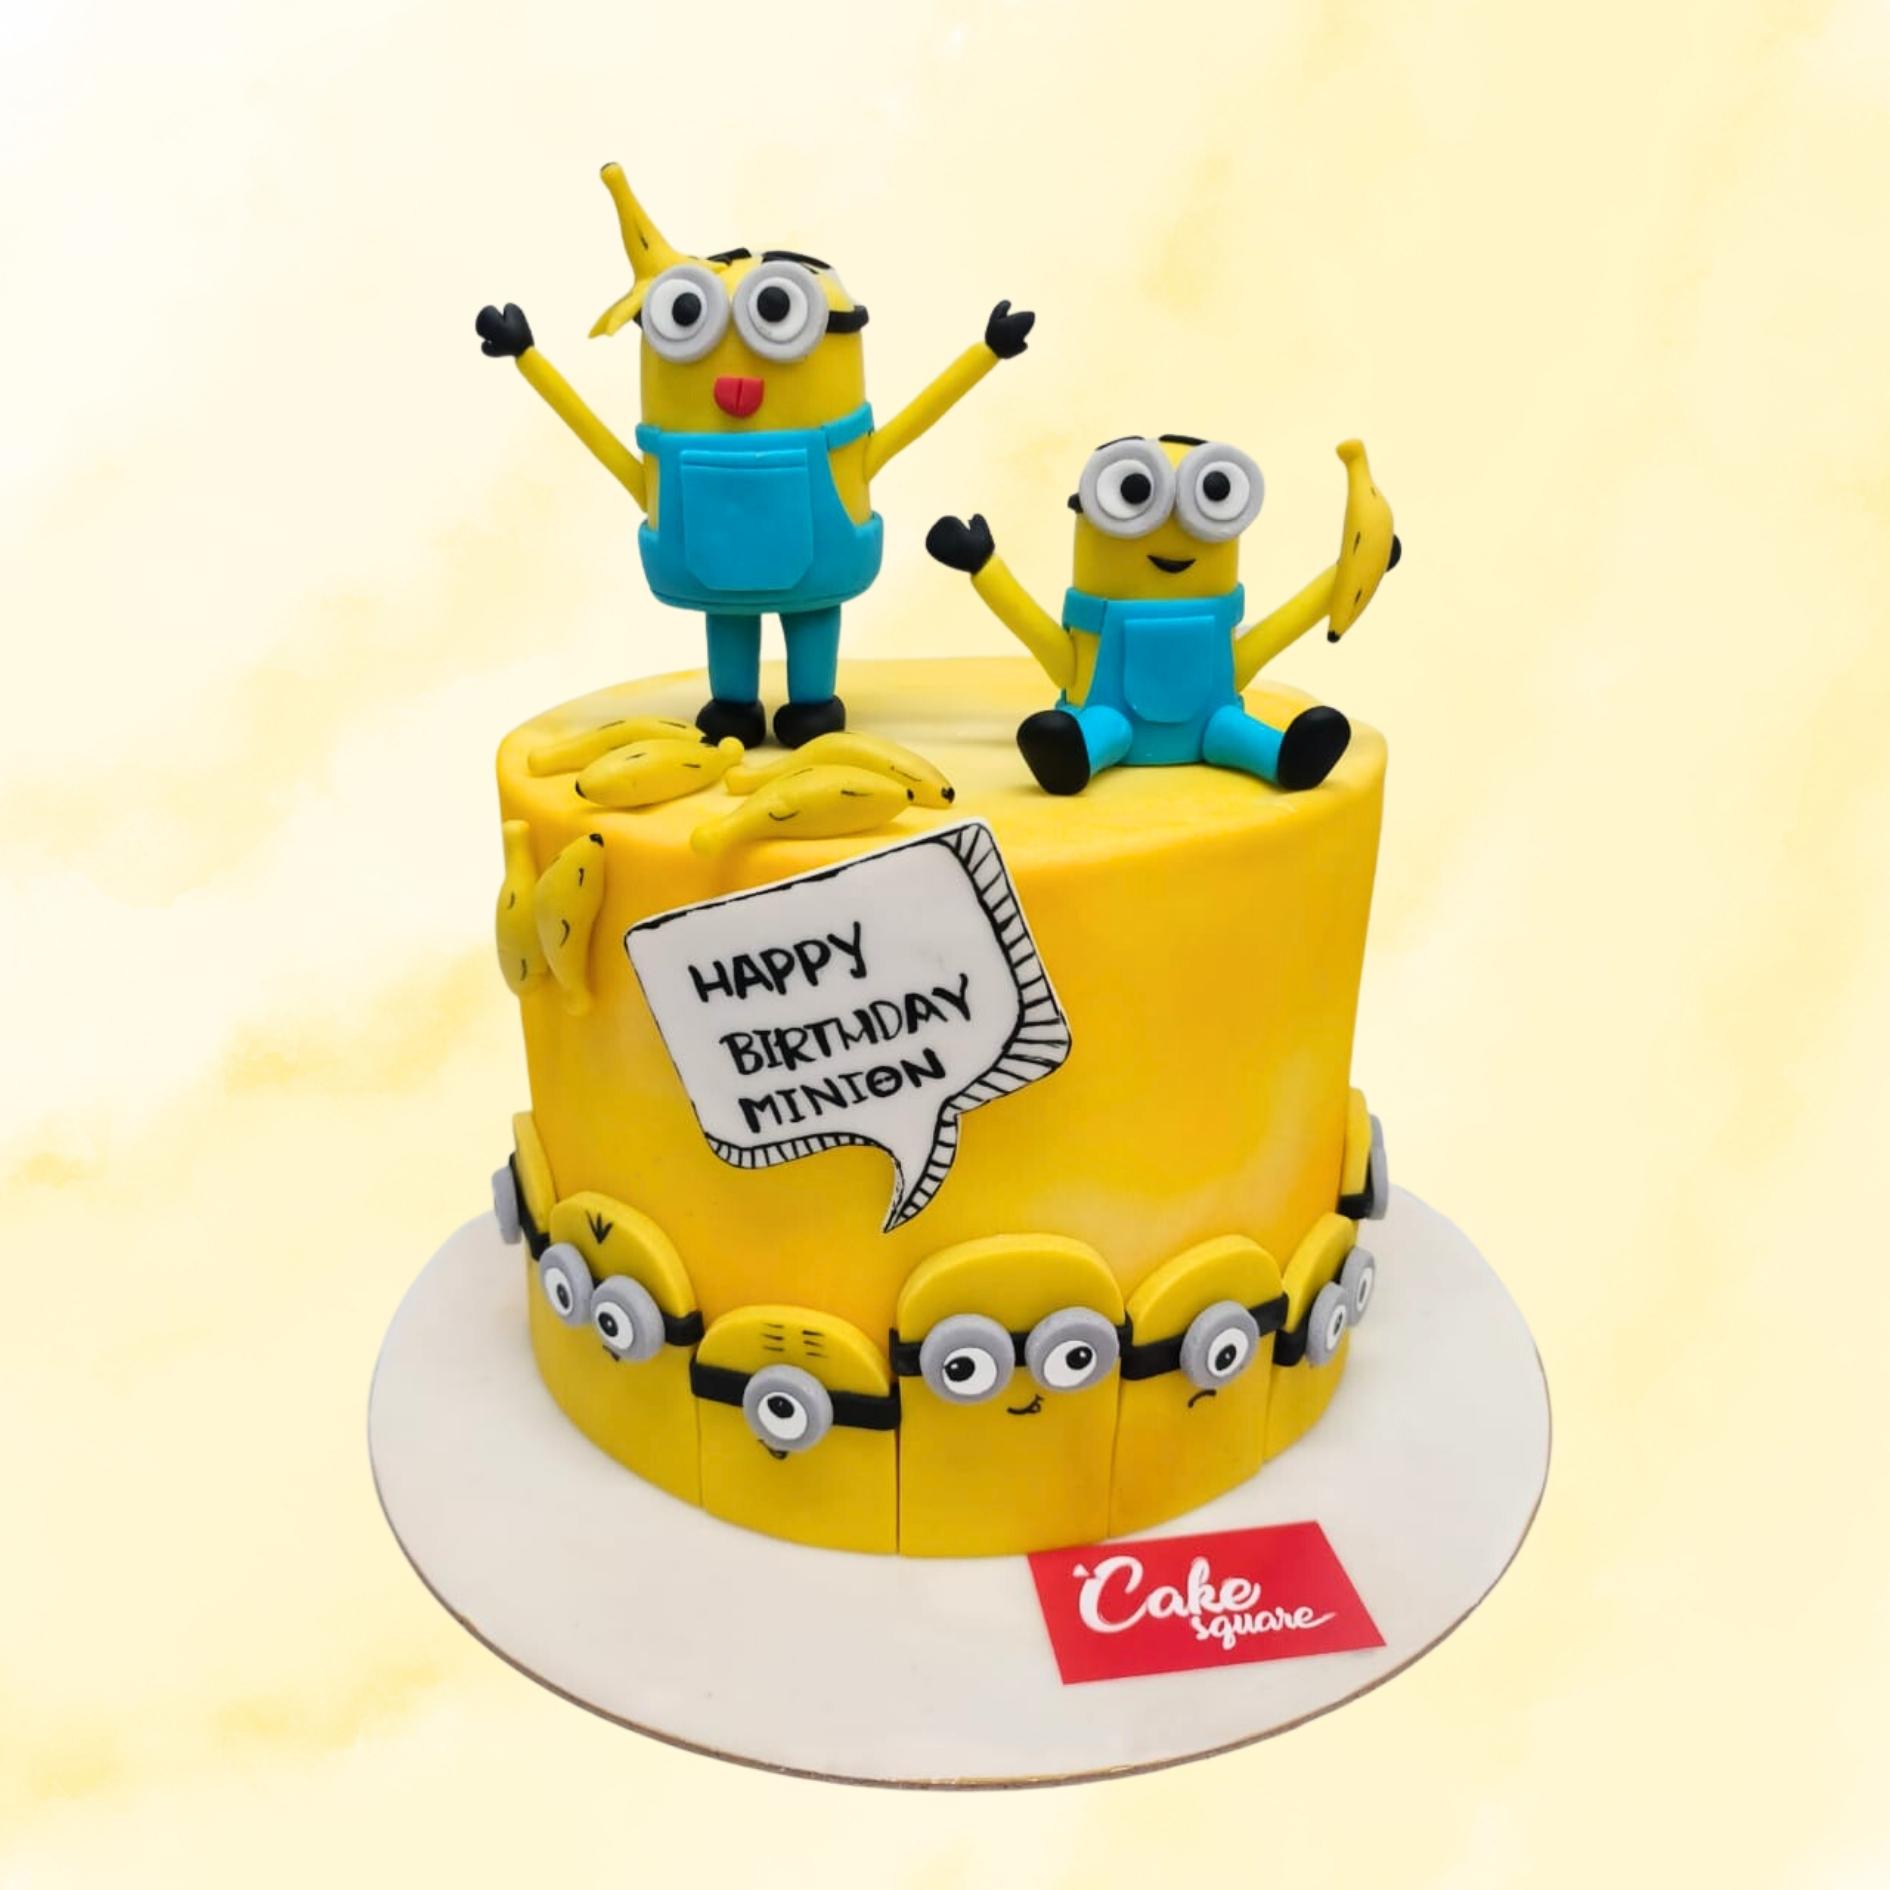 Cute Minion Cake | Celebratebigday.com